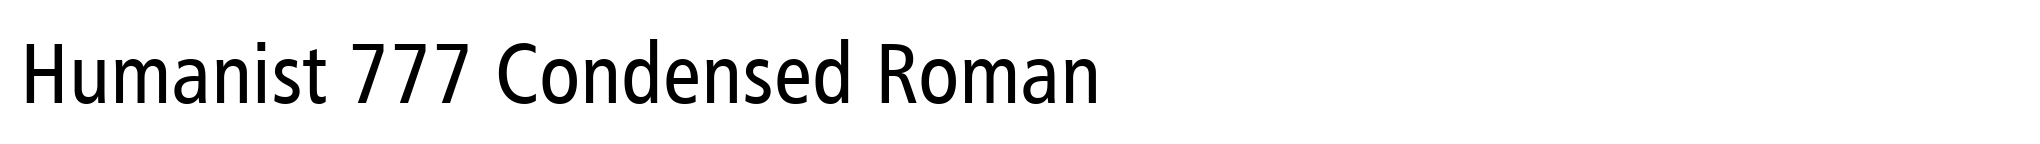 Humanist 777 Condensed Roman image